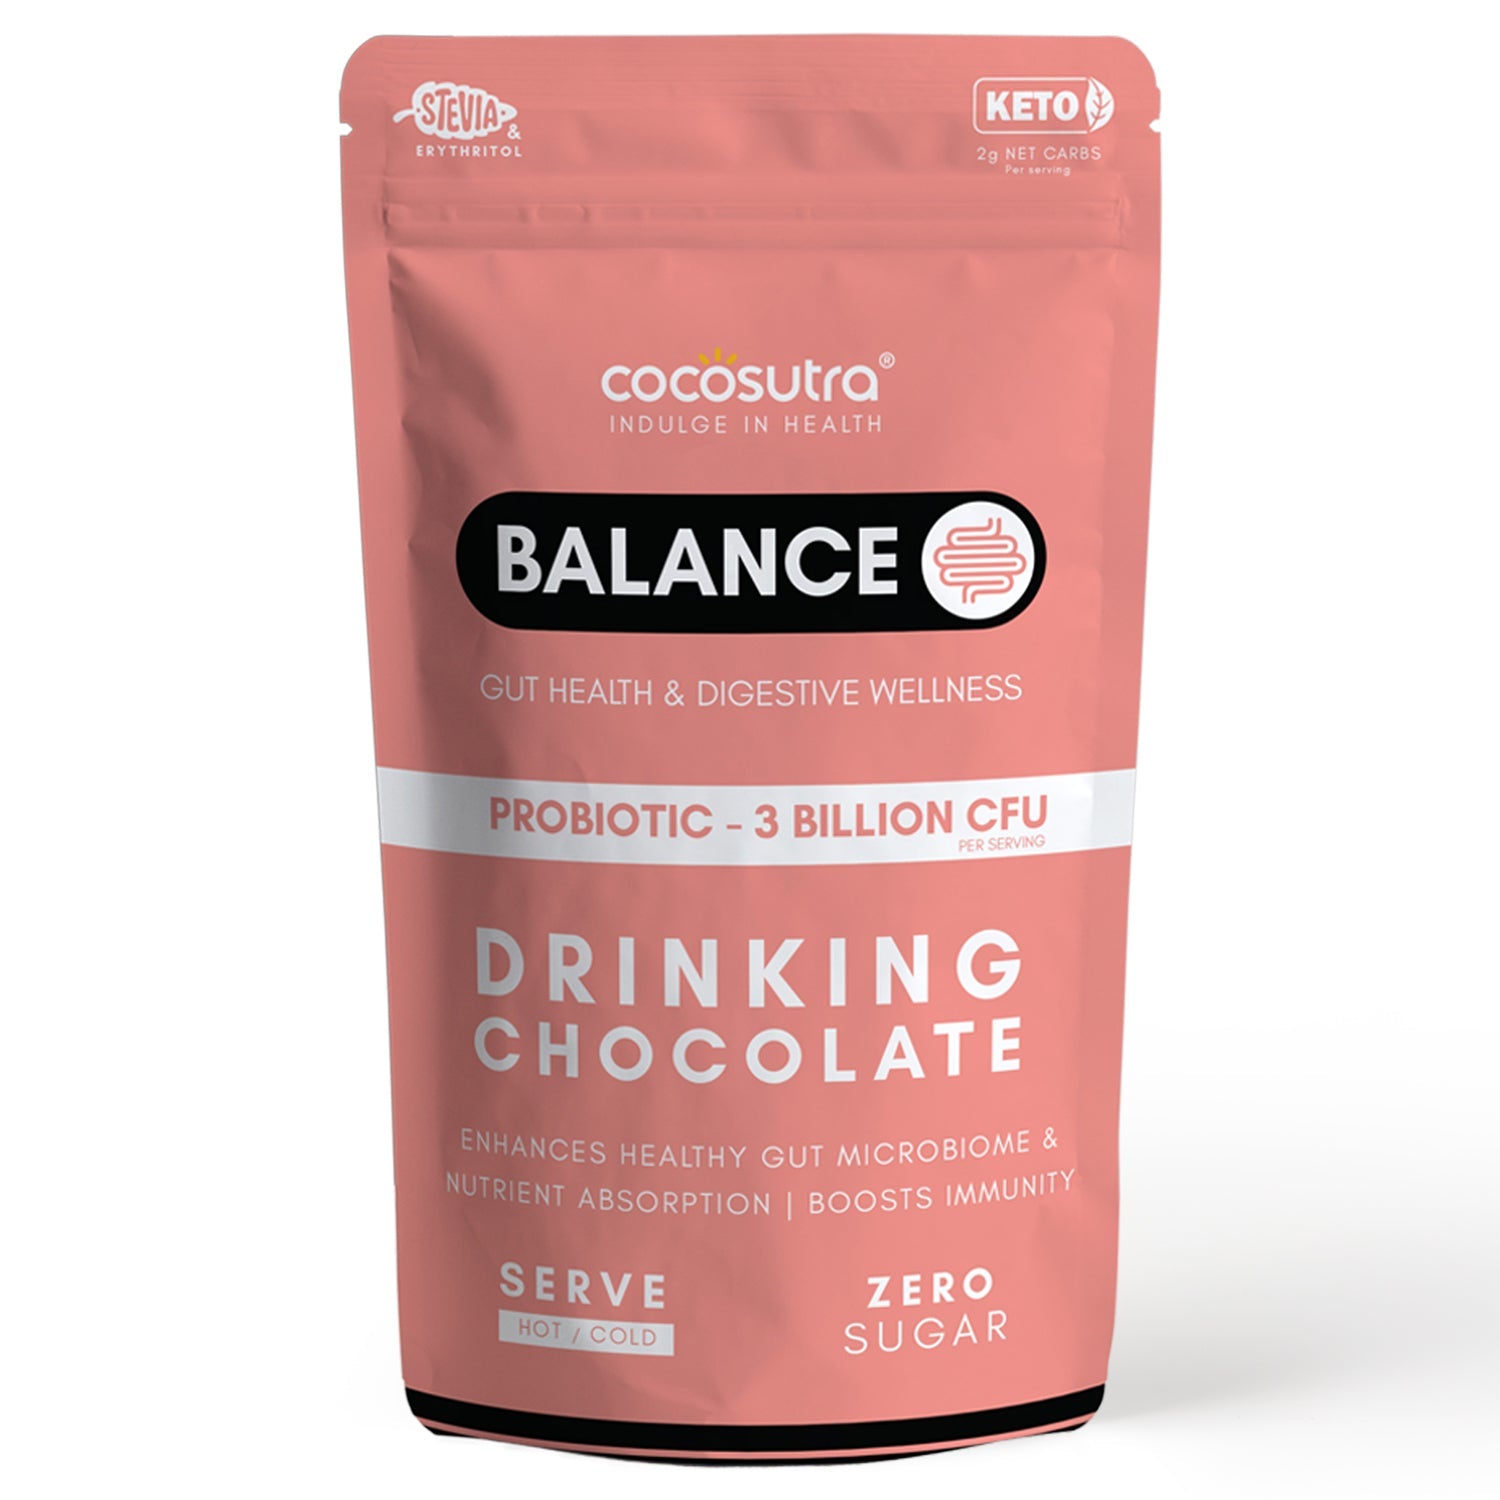 Cocosutra Balance - Sugar Free Drinking Chocolate Mix - Gut Health & Digestive Wellness Probiotic Supplement